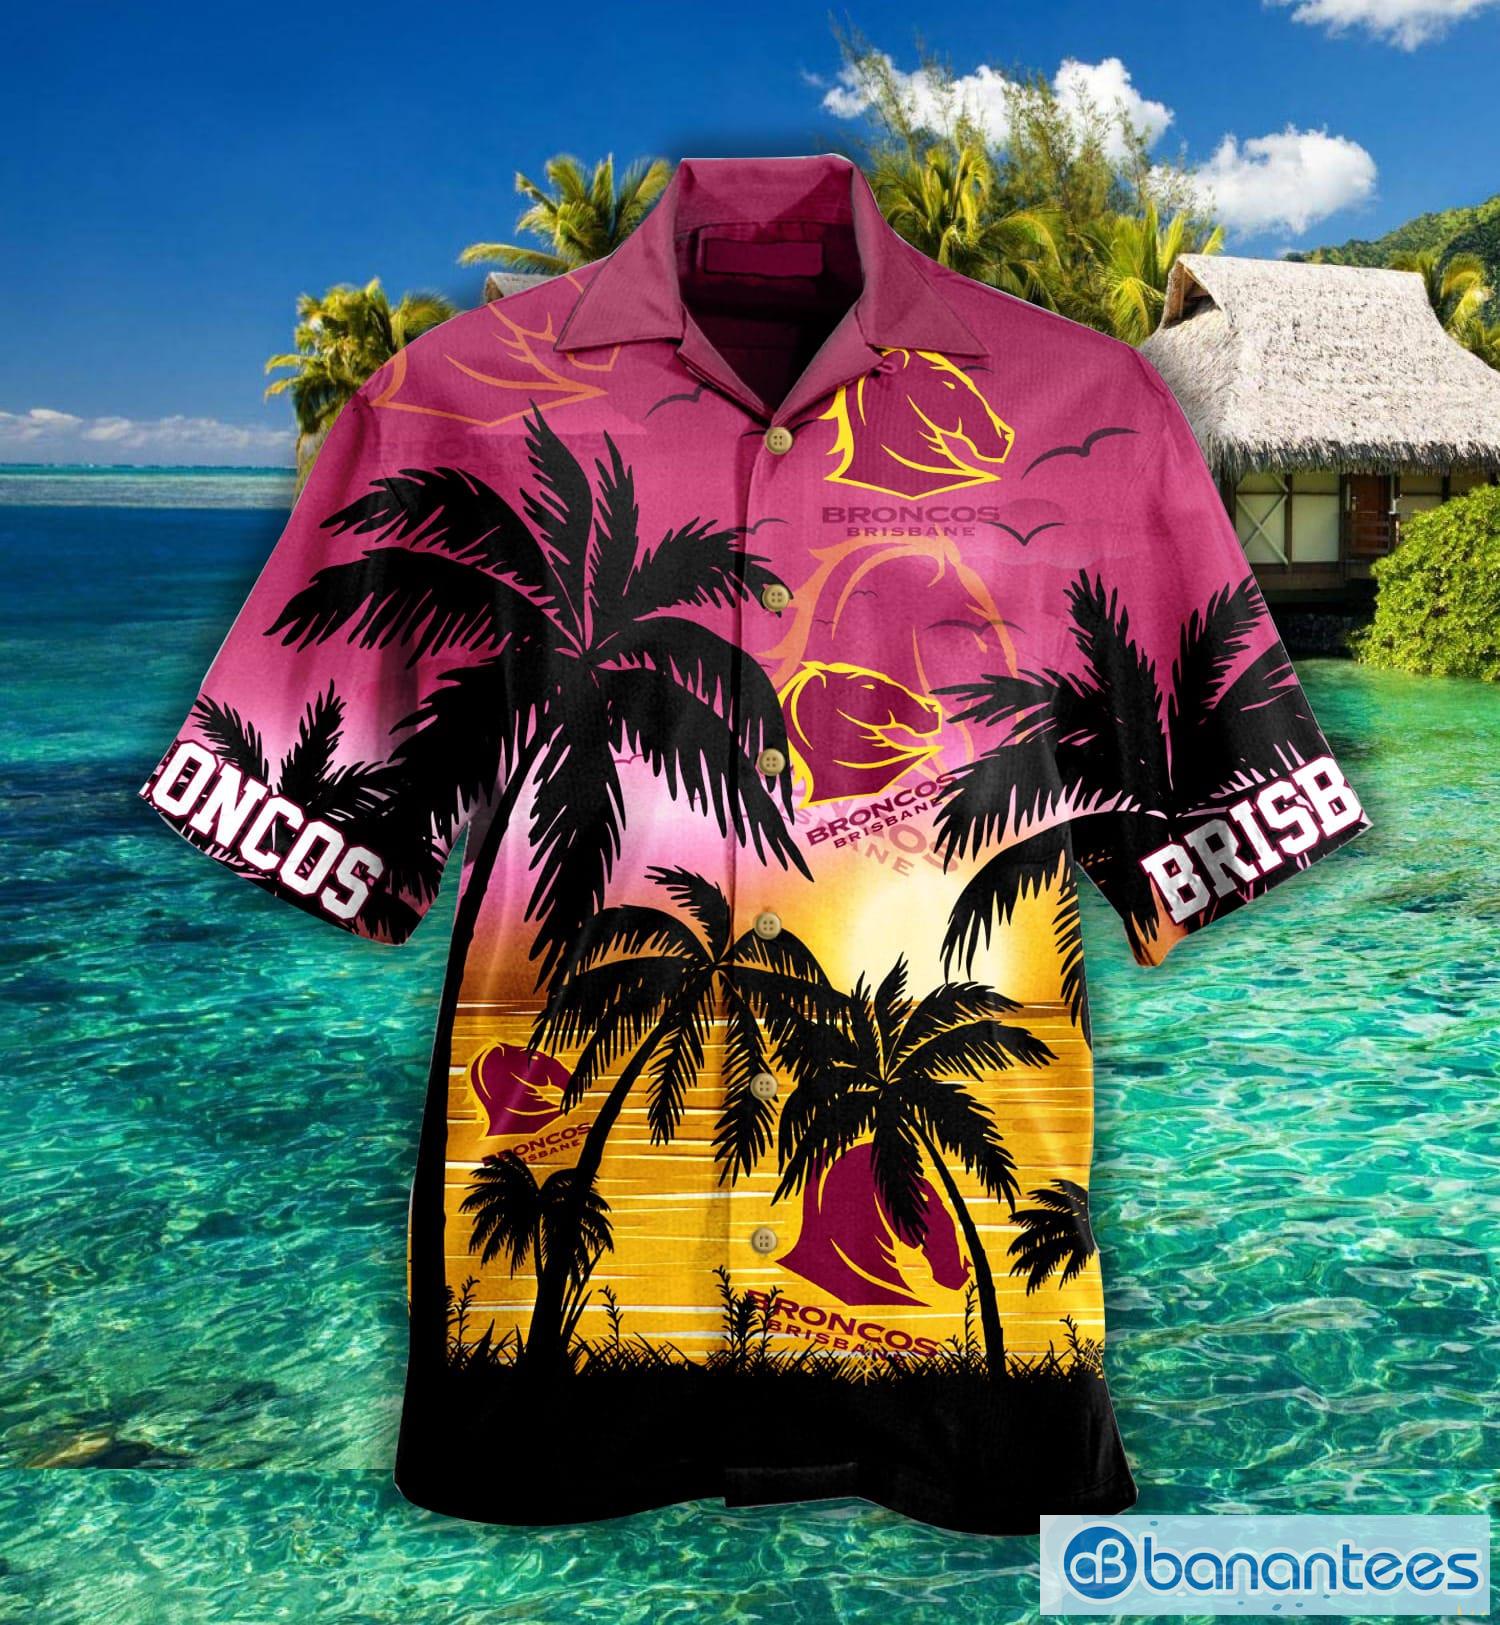 Brisbane Sunset Hawaiian Shirt For Fans Product Photo 1